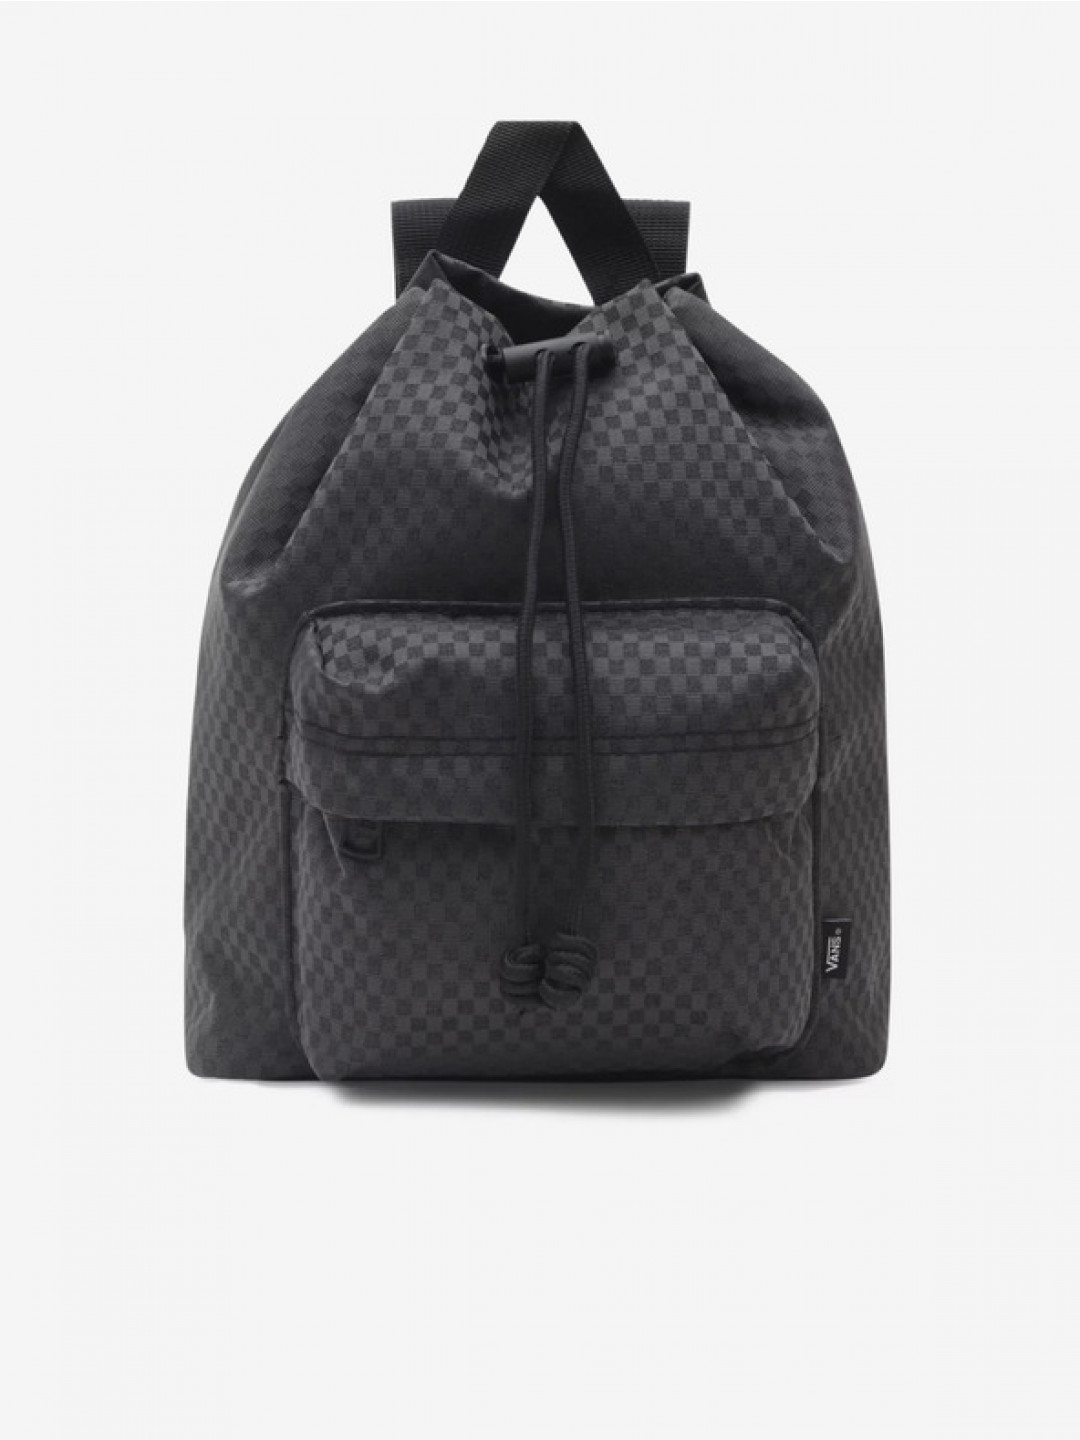 Vans Seeker Mini Backpack Batoh Černá